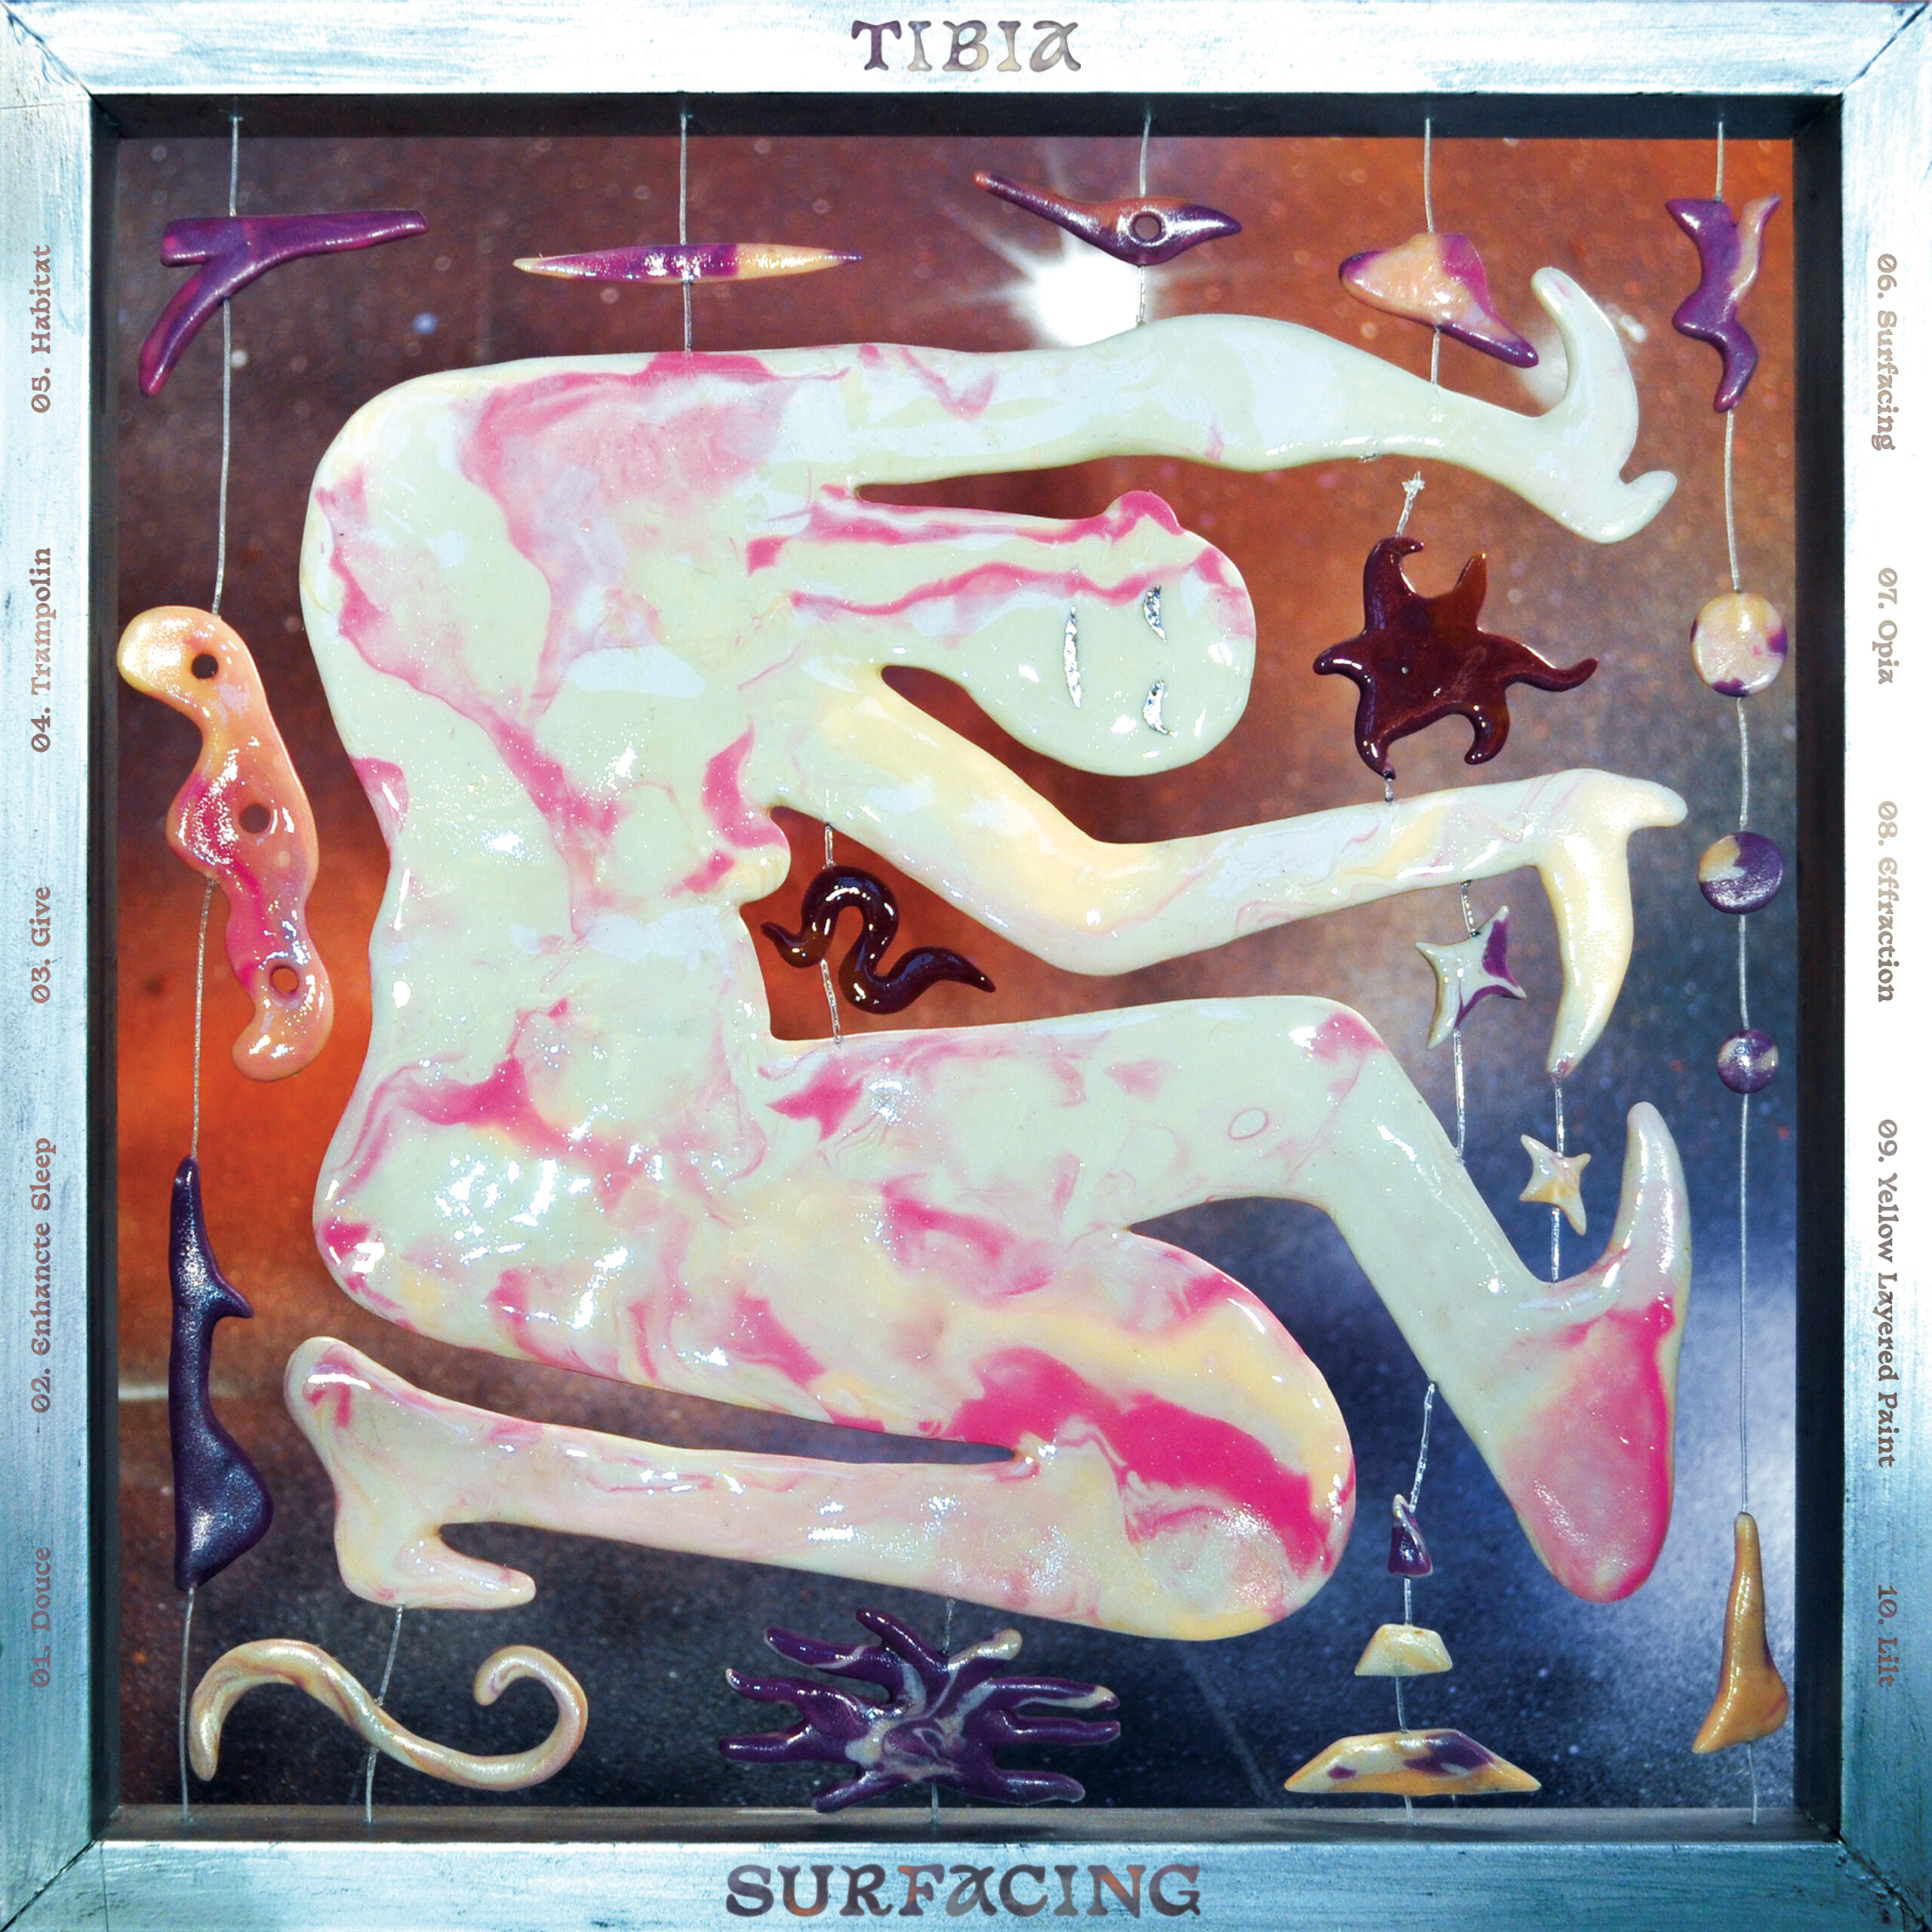 Tibia - Surfacing
Album Cover / Art Direction and Graphic Design via independent label ‎ <br><u><a href="https://www.instagram.com/body_verse/" target="_blank" rel="noopener noreferrer">Body Verse</a></u> 